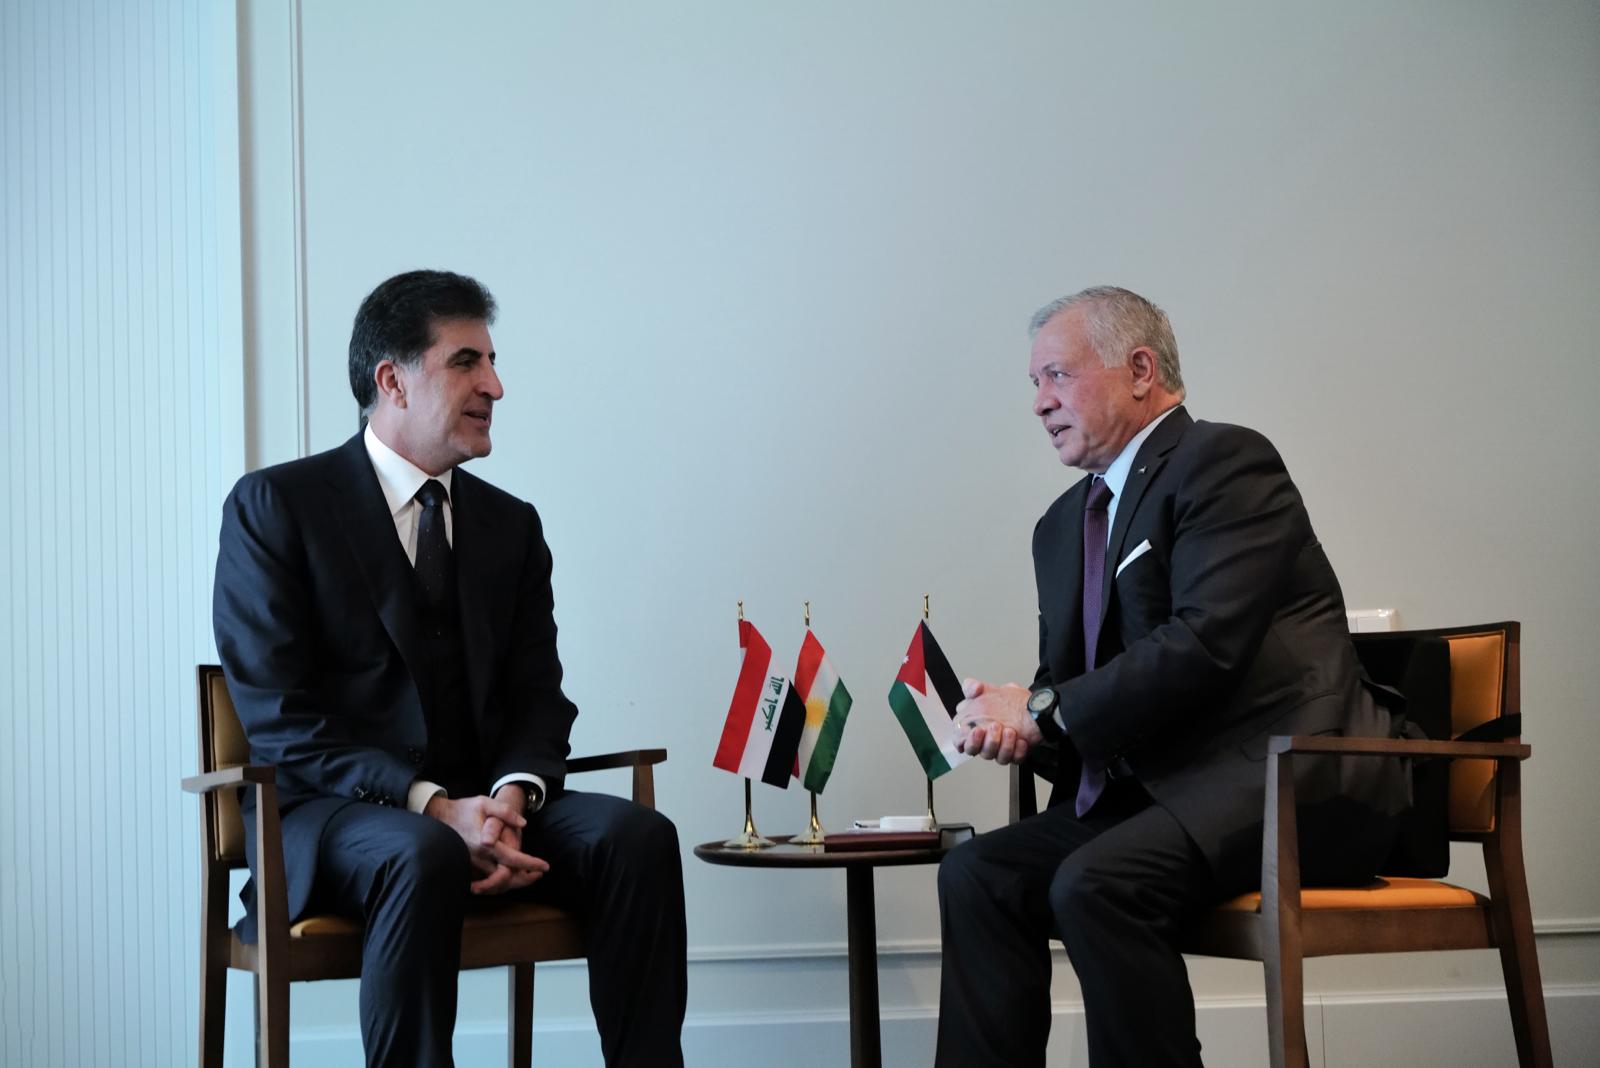 Nechirvan Barzani King Abdullah II discuss the regions latest developments